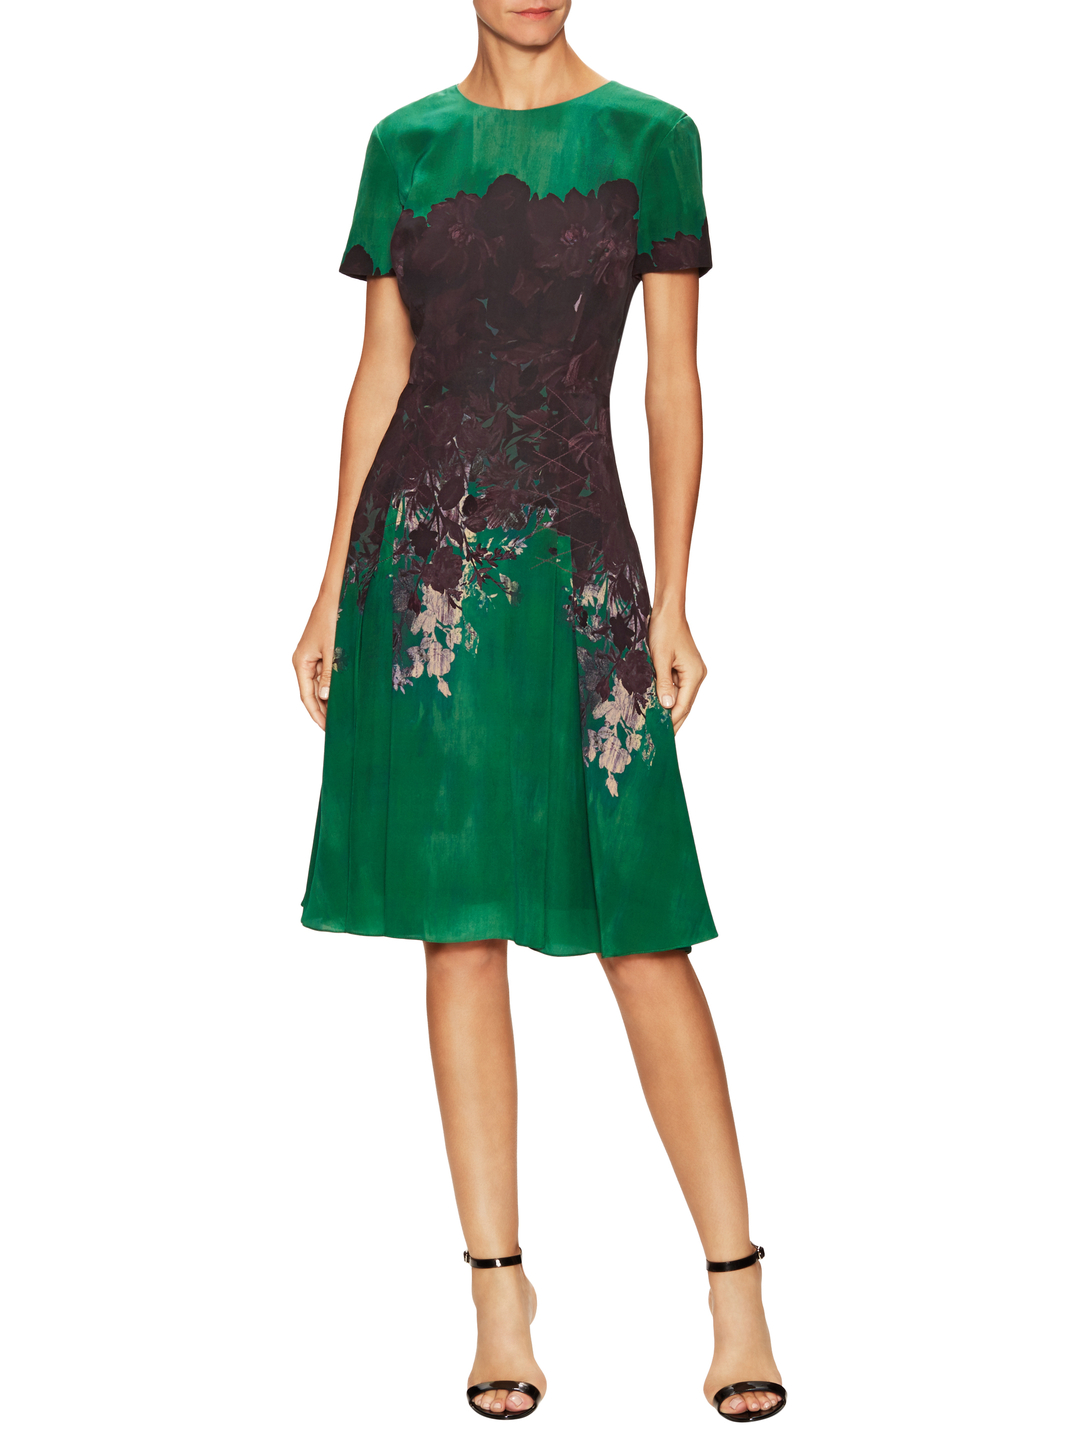 Carolina Hererra Pre-Fall 2015 green patterned silk dress